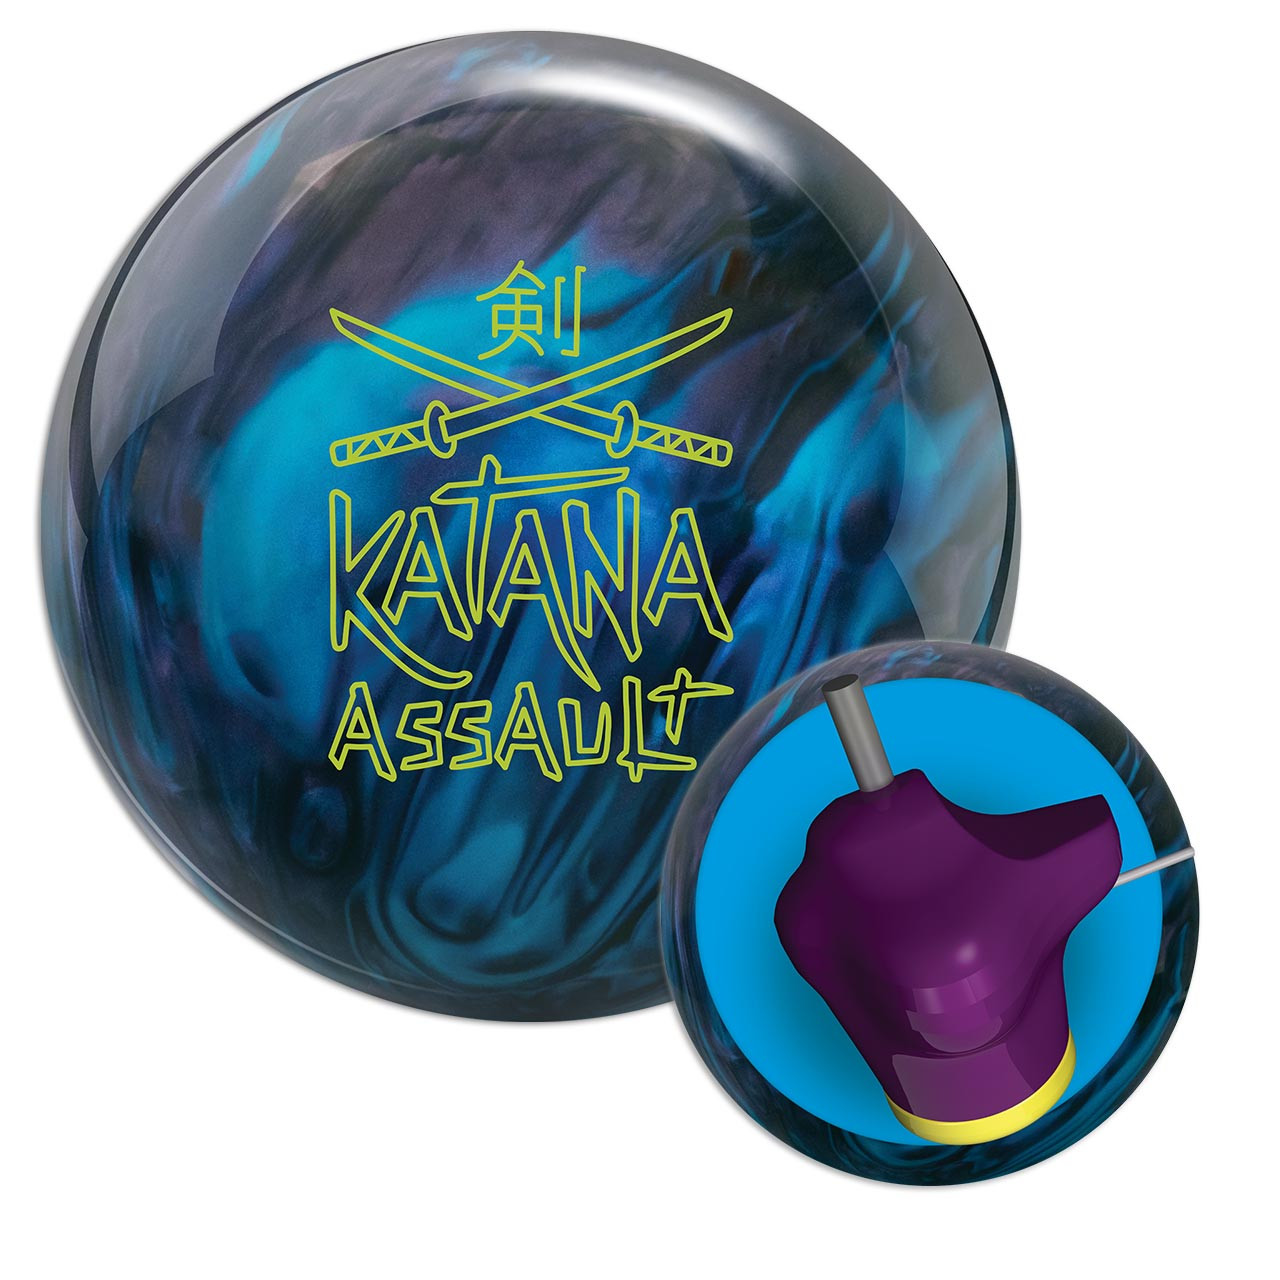 Radical Katana Assault Bowling Ball FREE SHIPPING